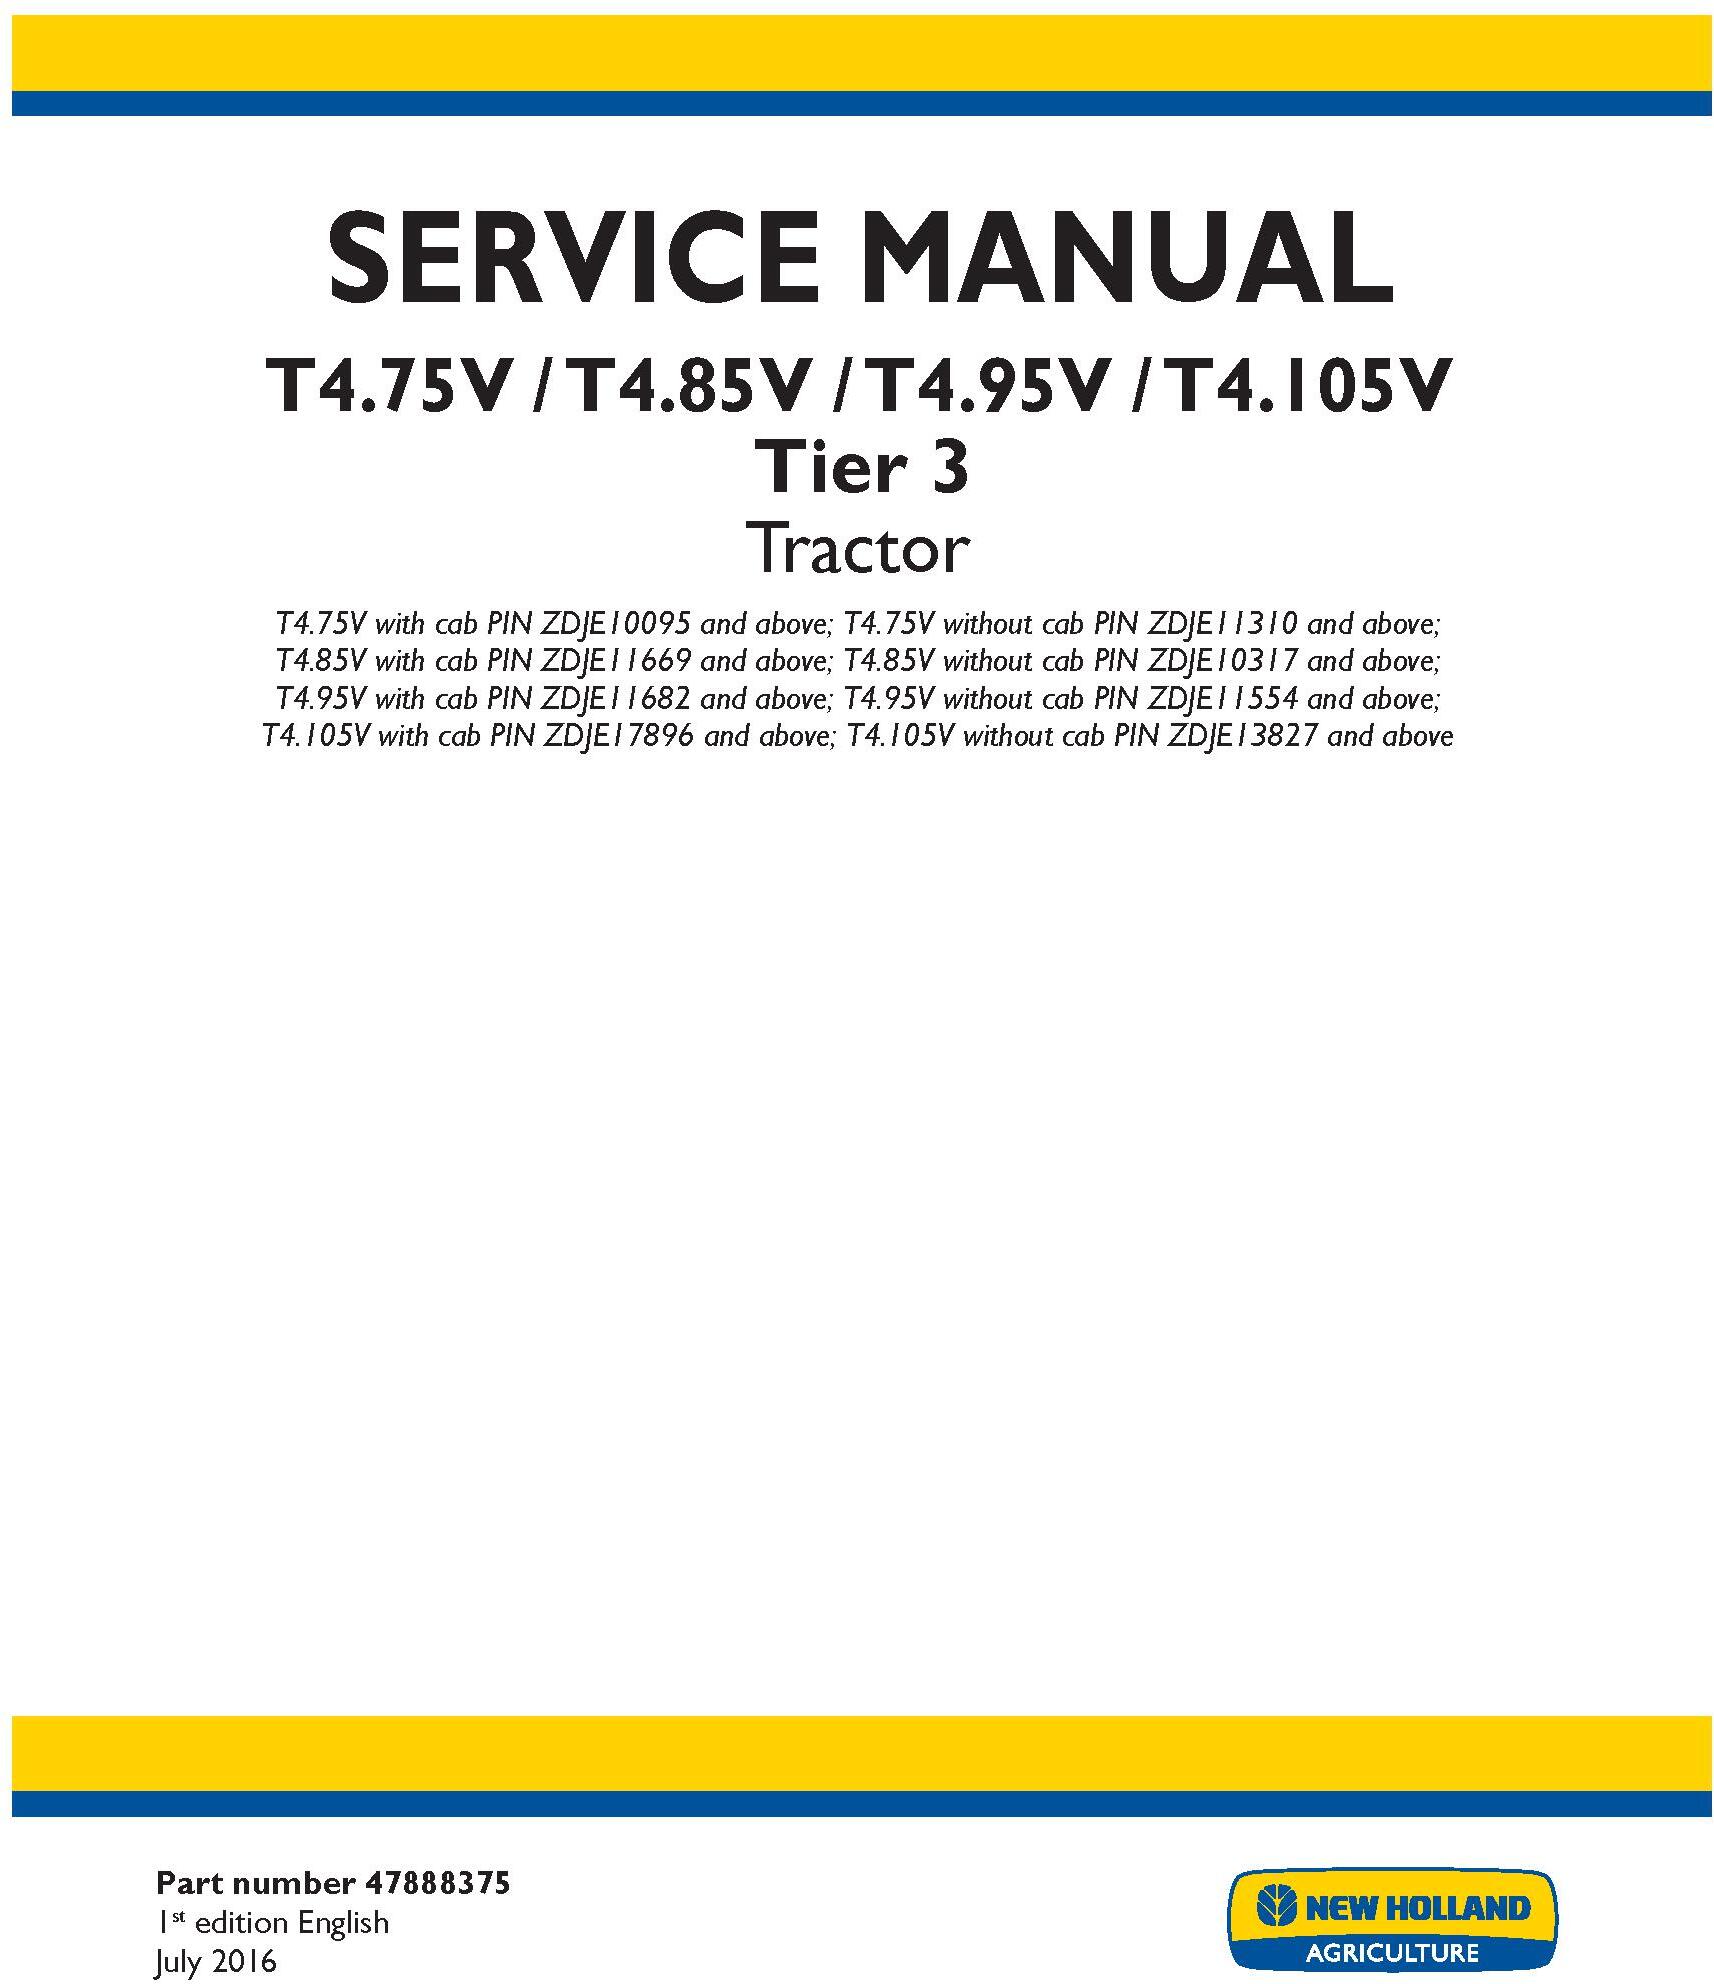 New Holland T4.75V, T4.85V, T4.95V, T4.105V Tier 3 Tractor Complete Service Manual (North America) - 19443